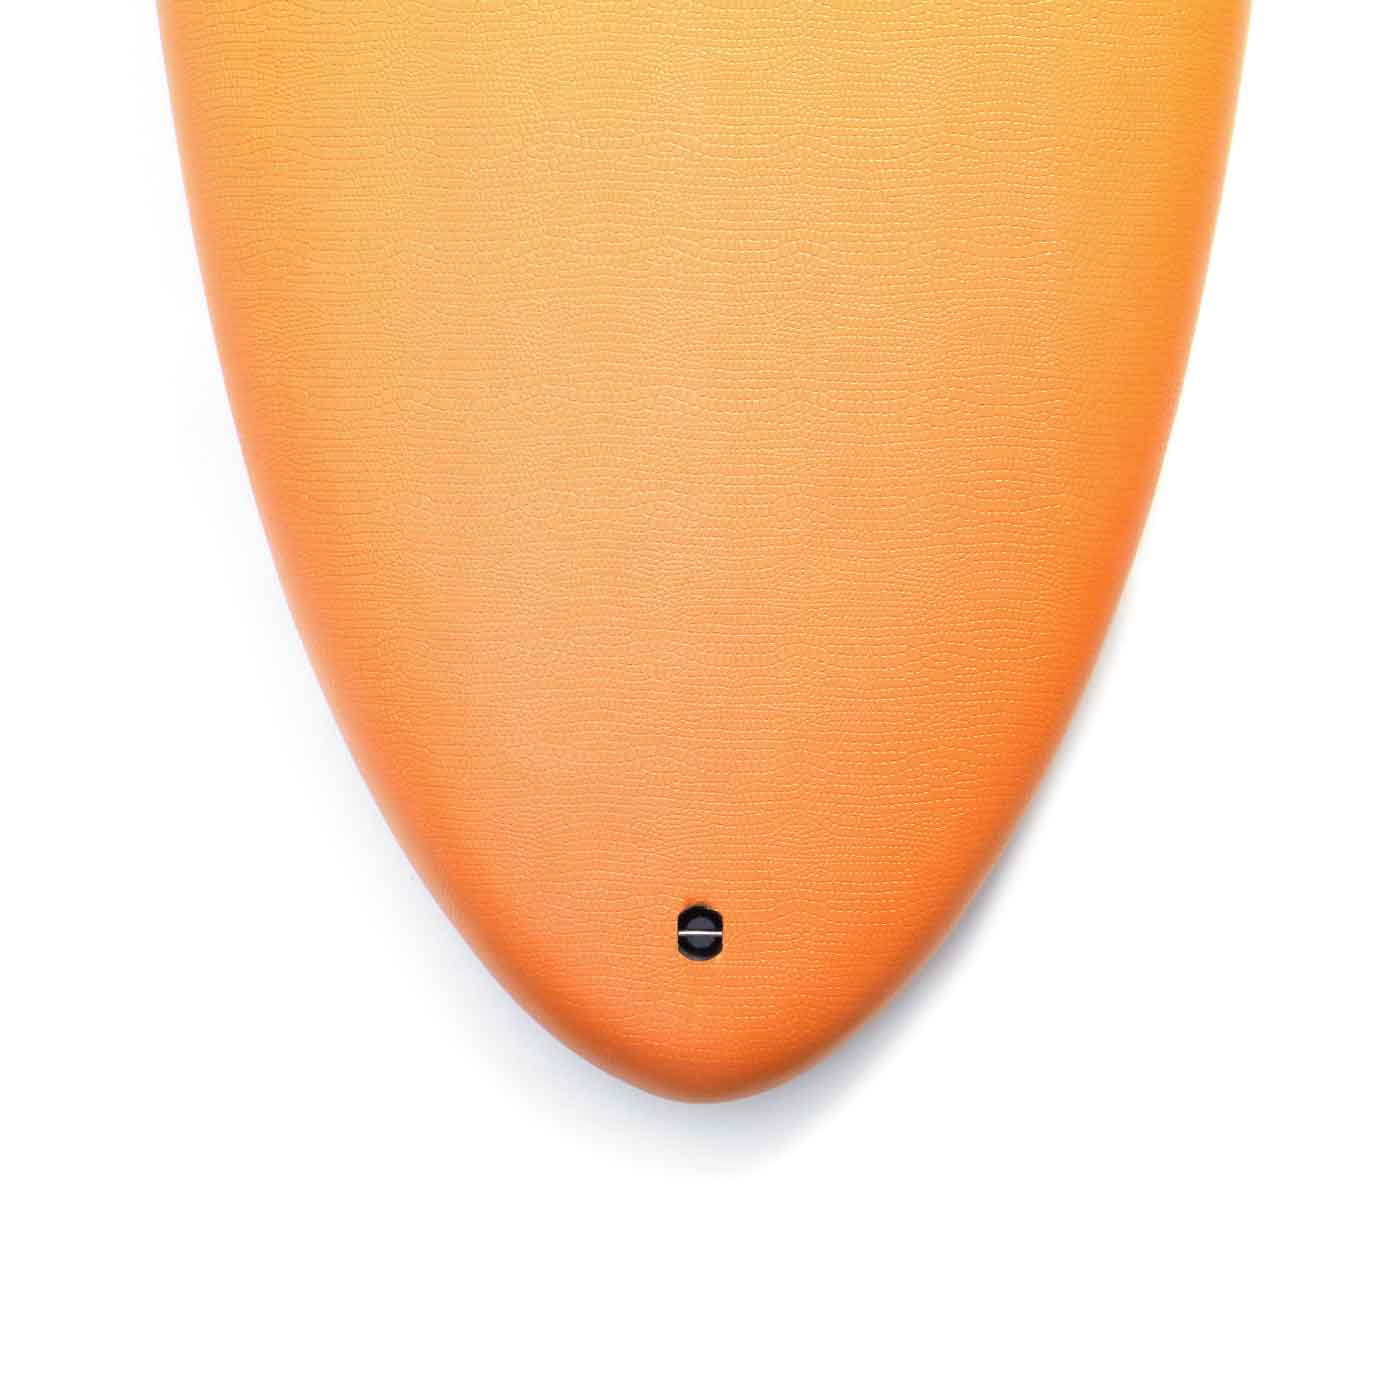 retriever summer funboard 7'0 soft top surfboard tail leashplug